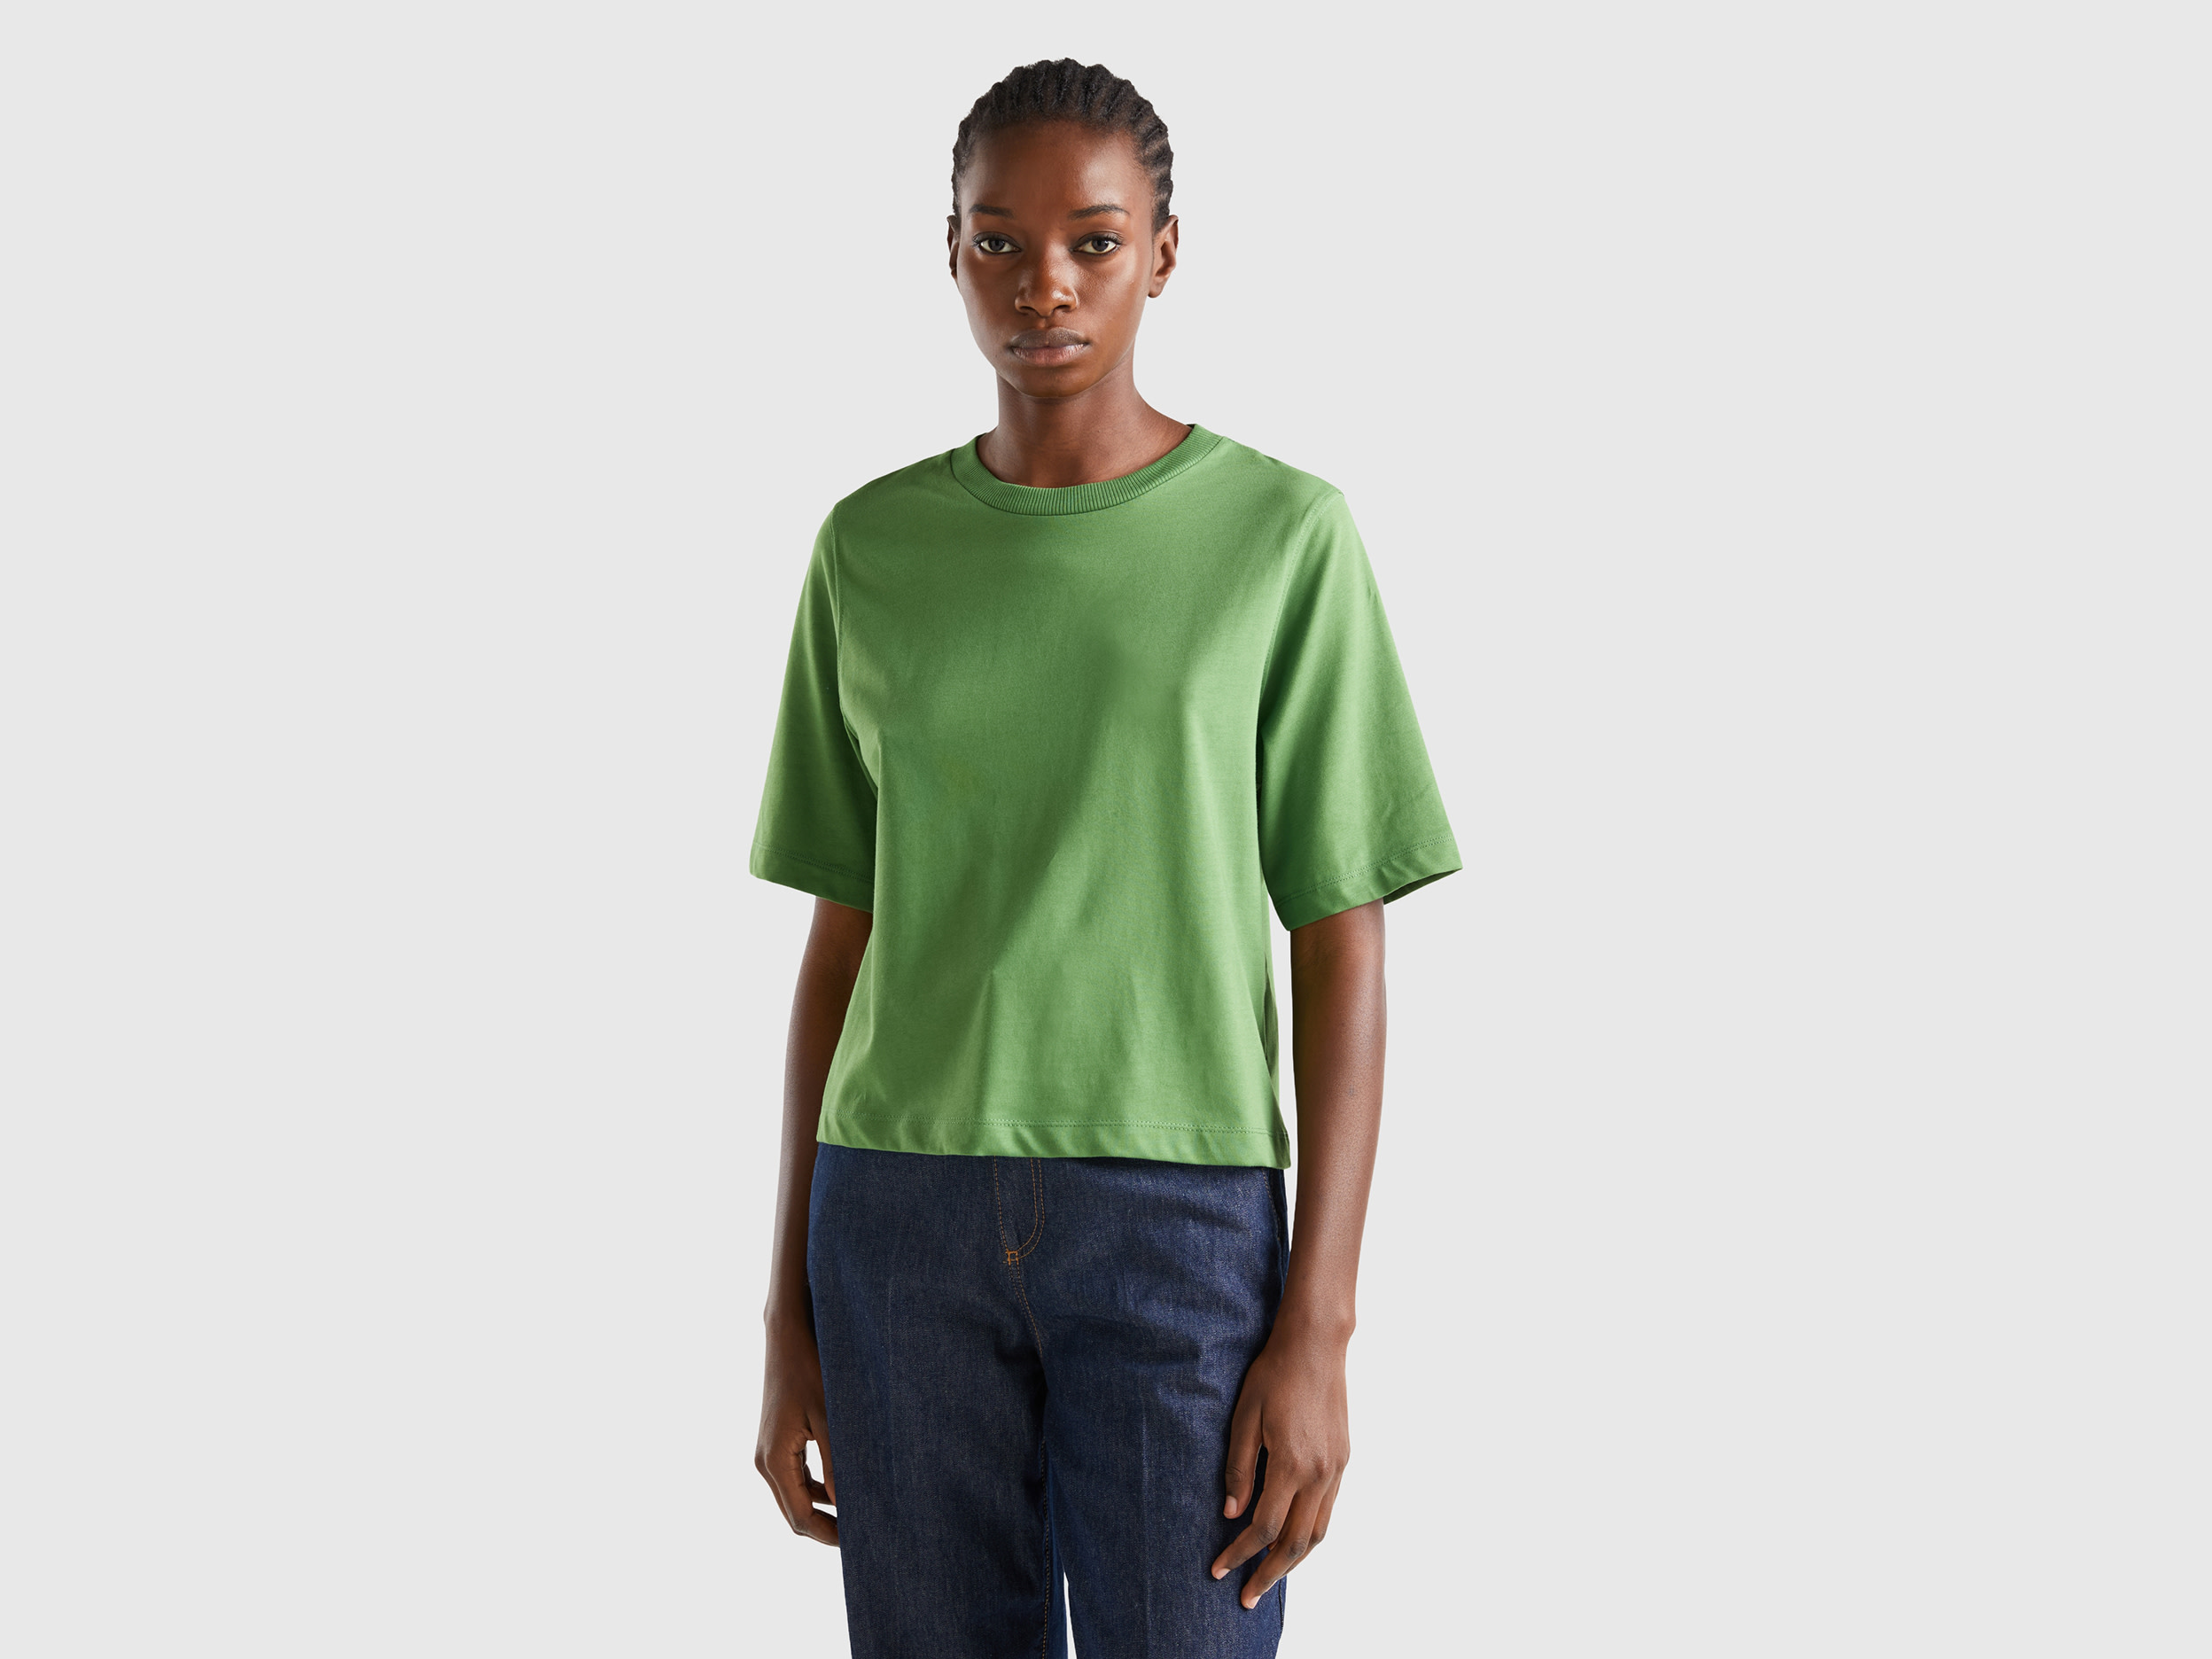 Benetton, 100% Cotton Boxy Fit T-shirt, size S, Military Green, Women